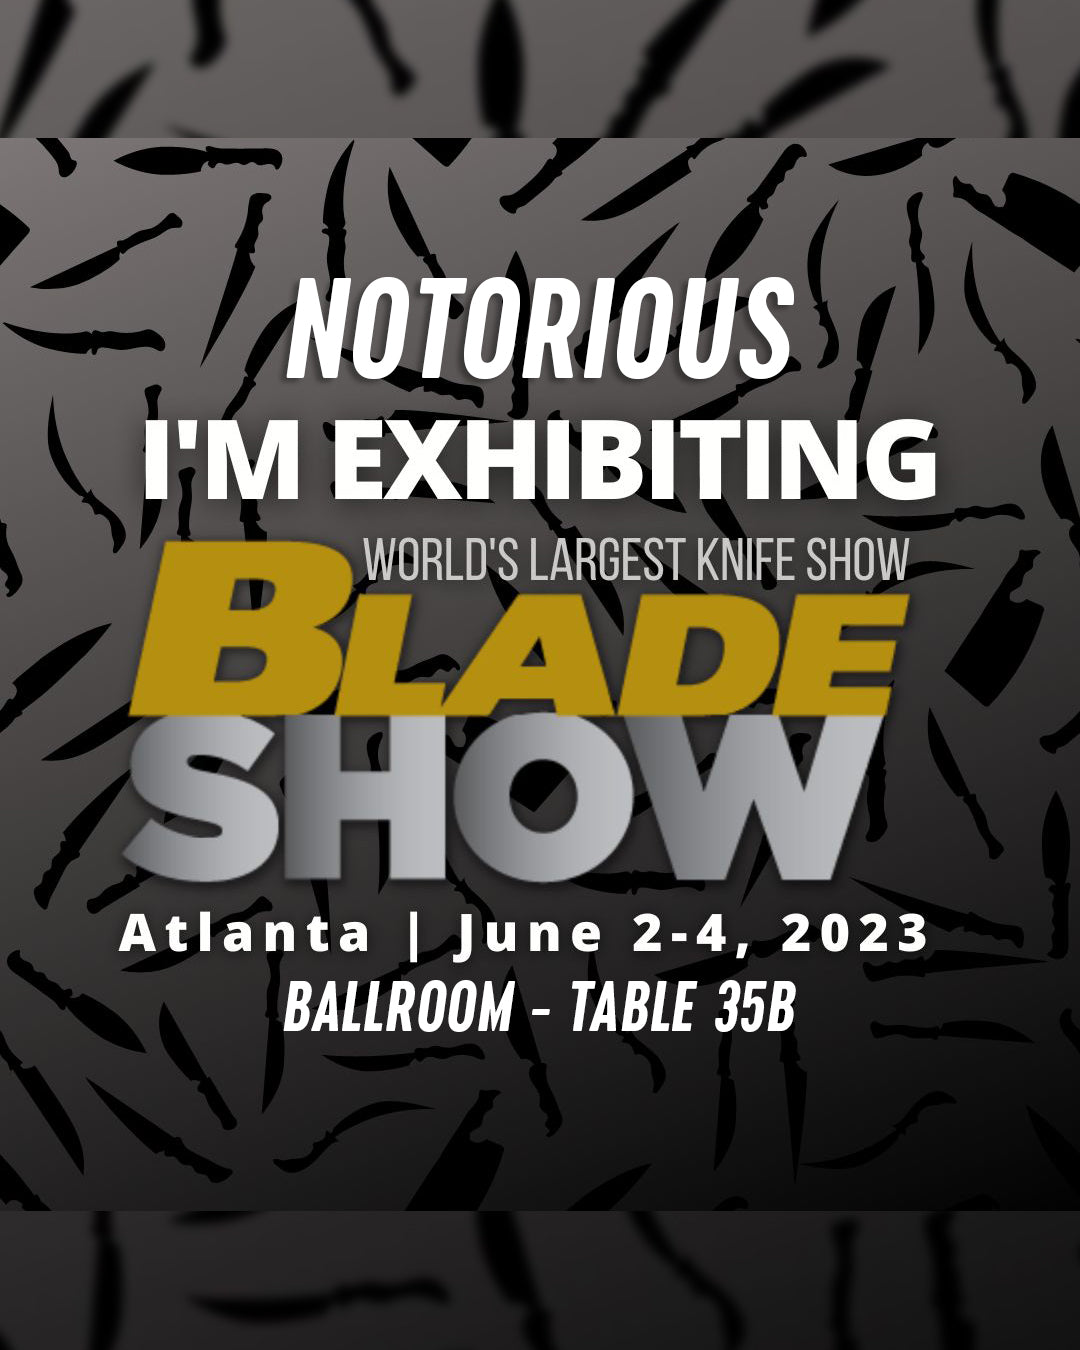 Blade Show Atlanta! June 2-4, 2023